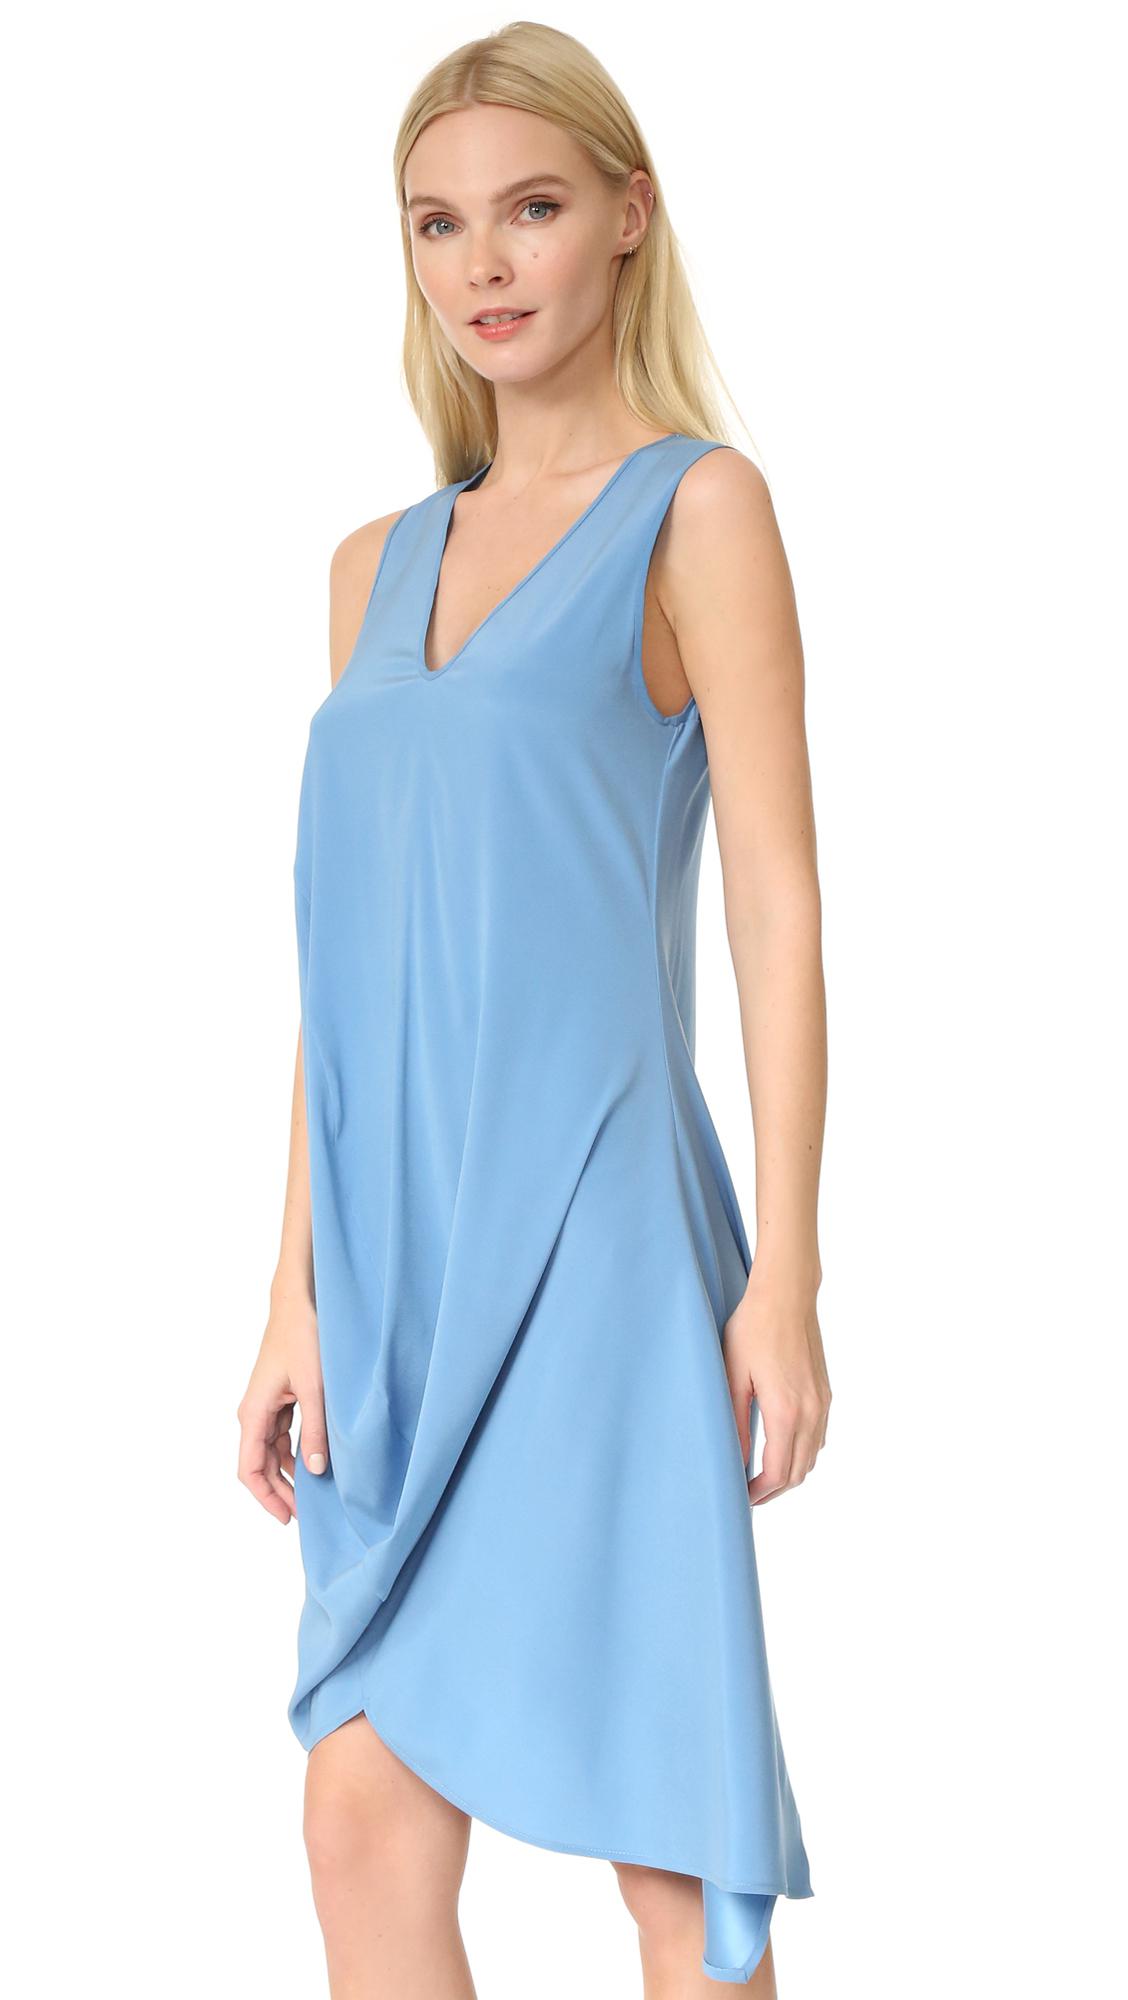 Lyst - Zero + Maria Cornejo Opposite Dress in Blue